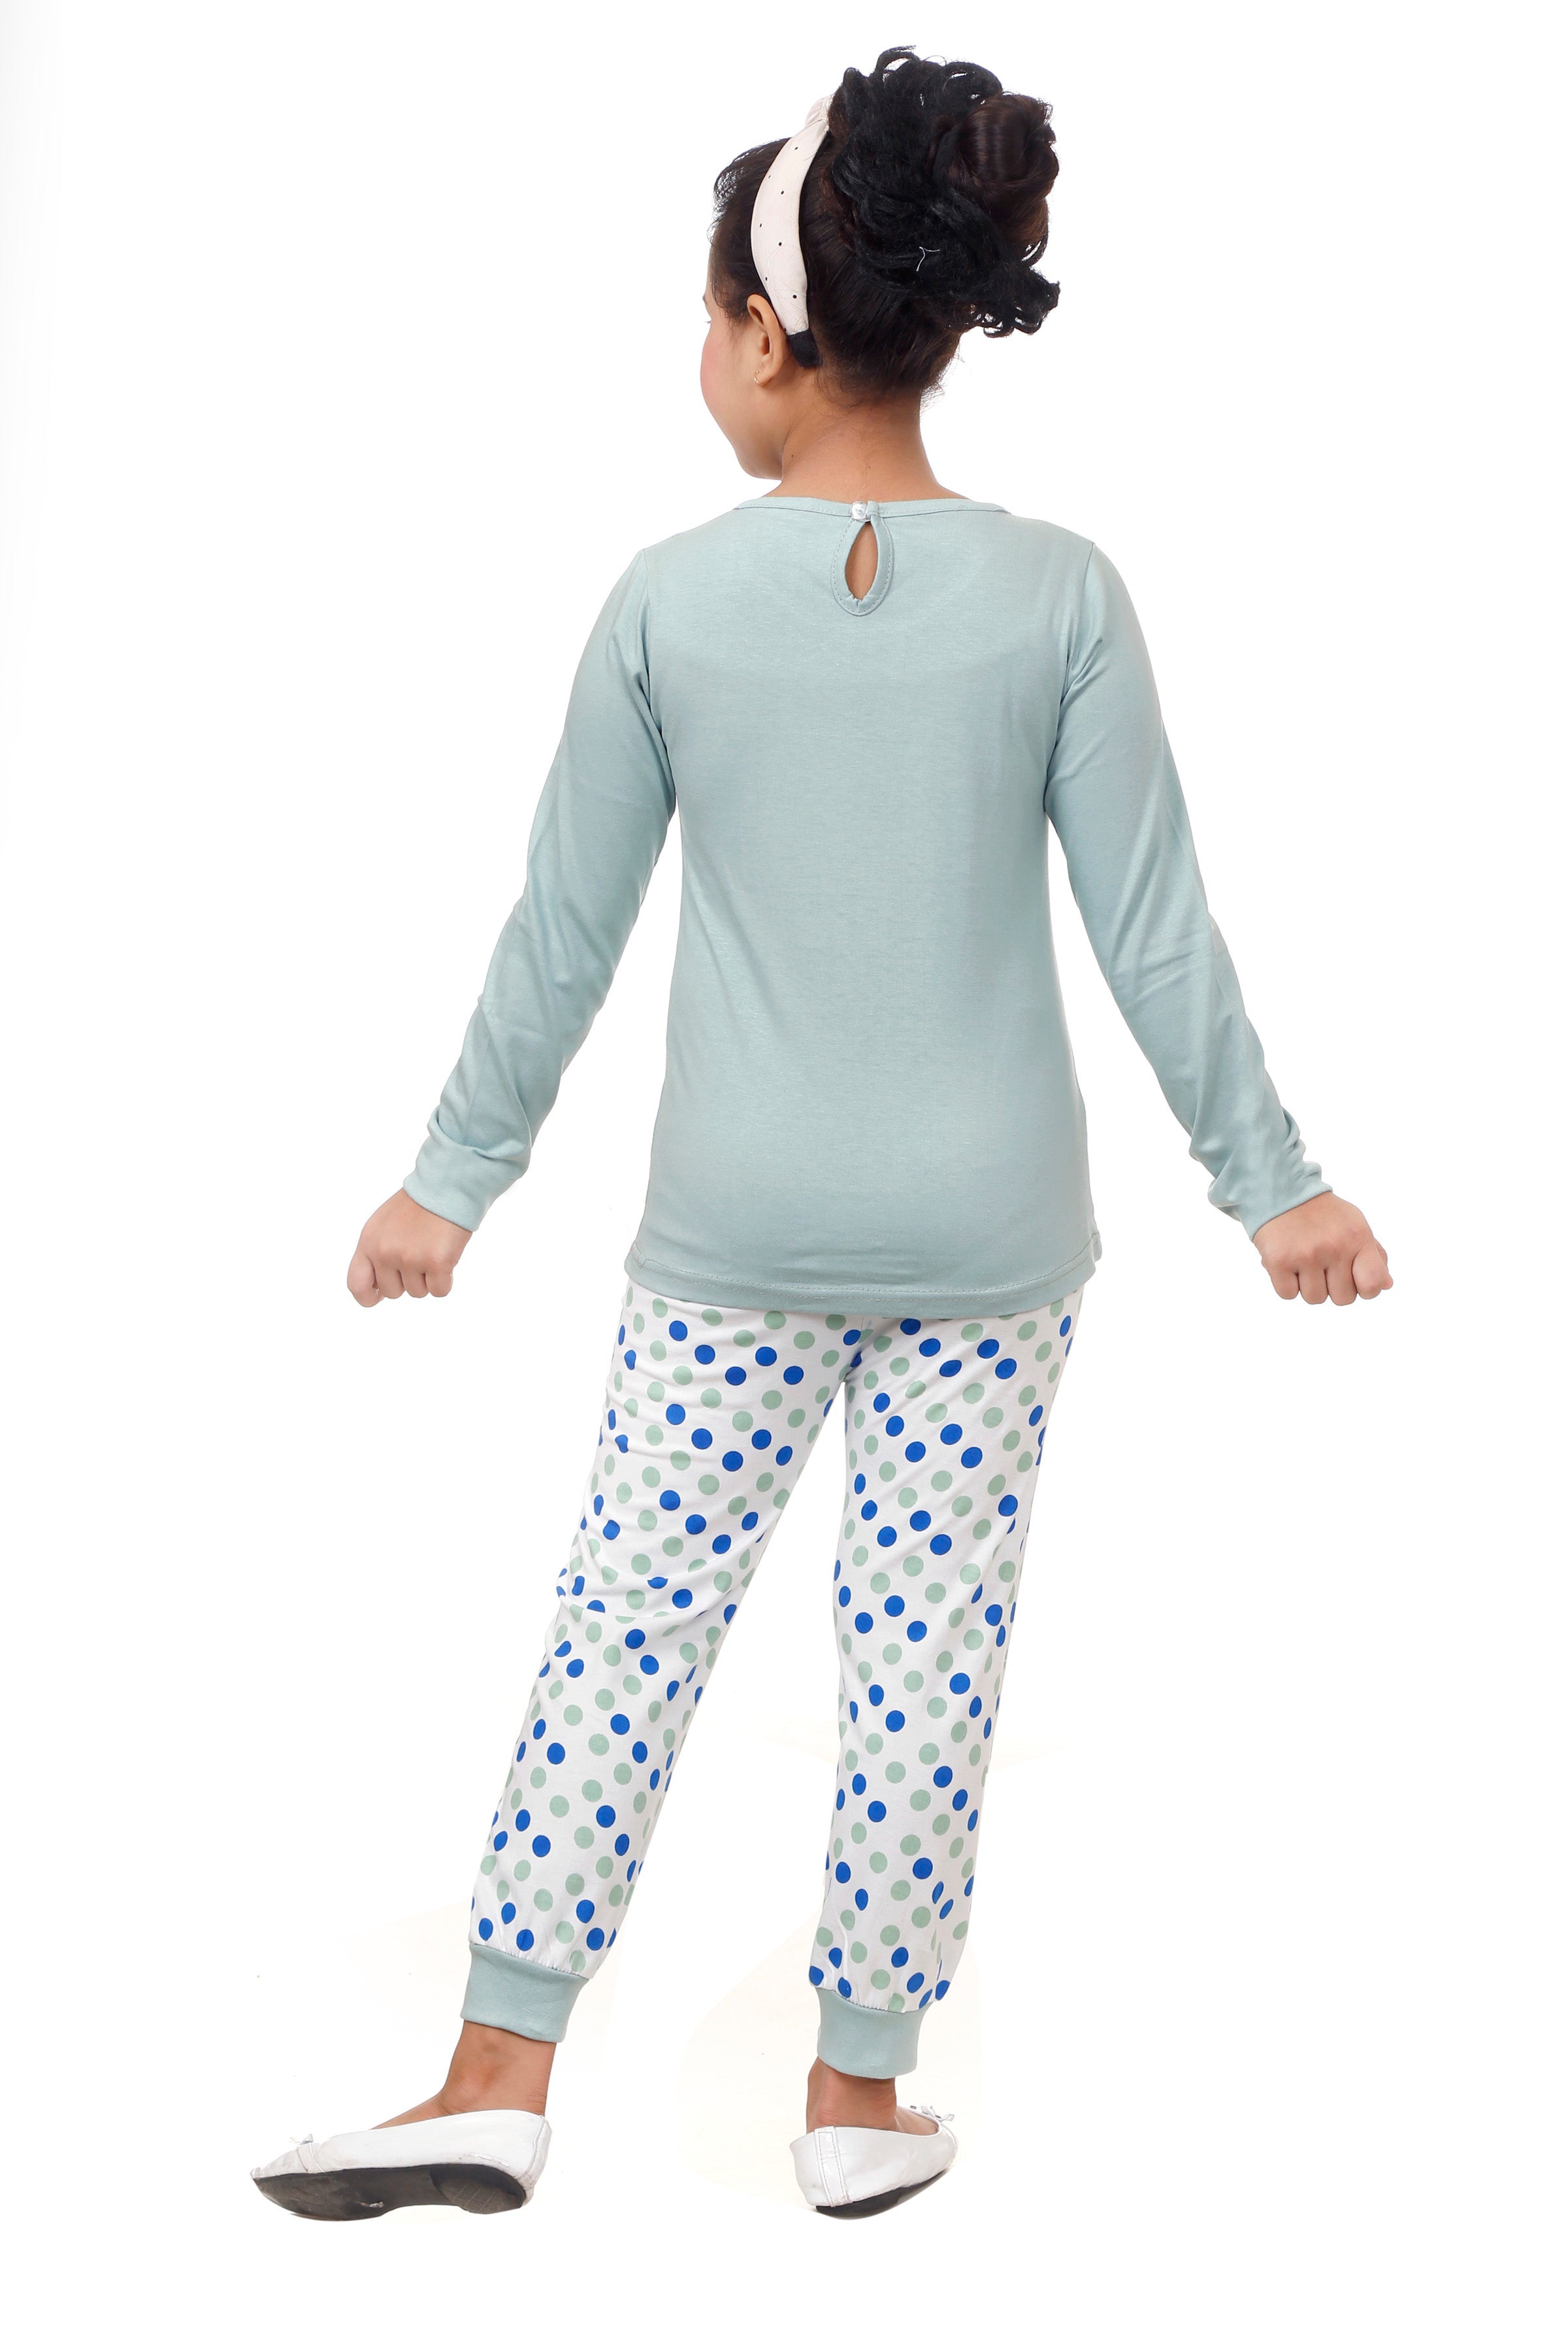 Cotton Pajama Pants in a Bag - Aloha Print | The Hawaii Store